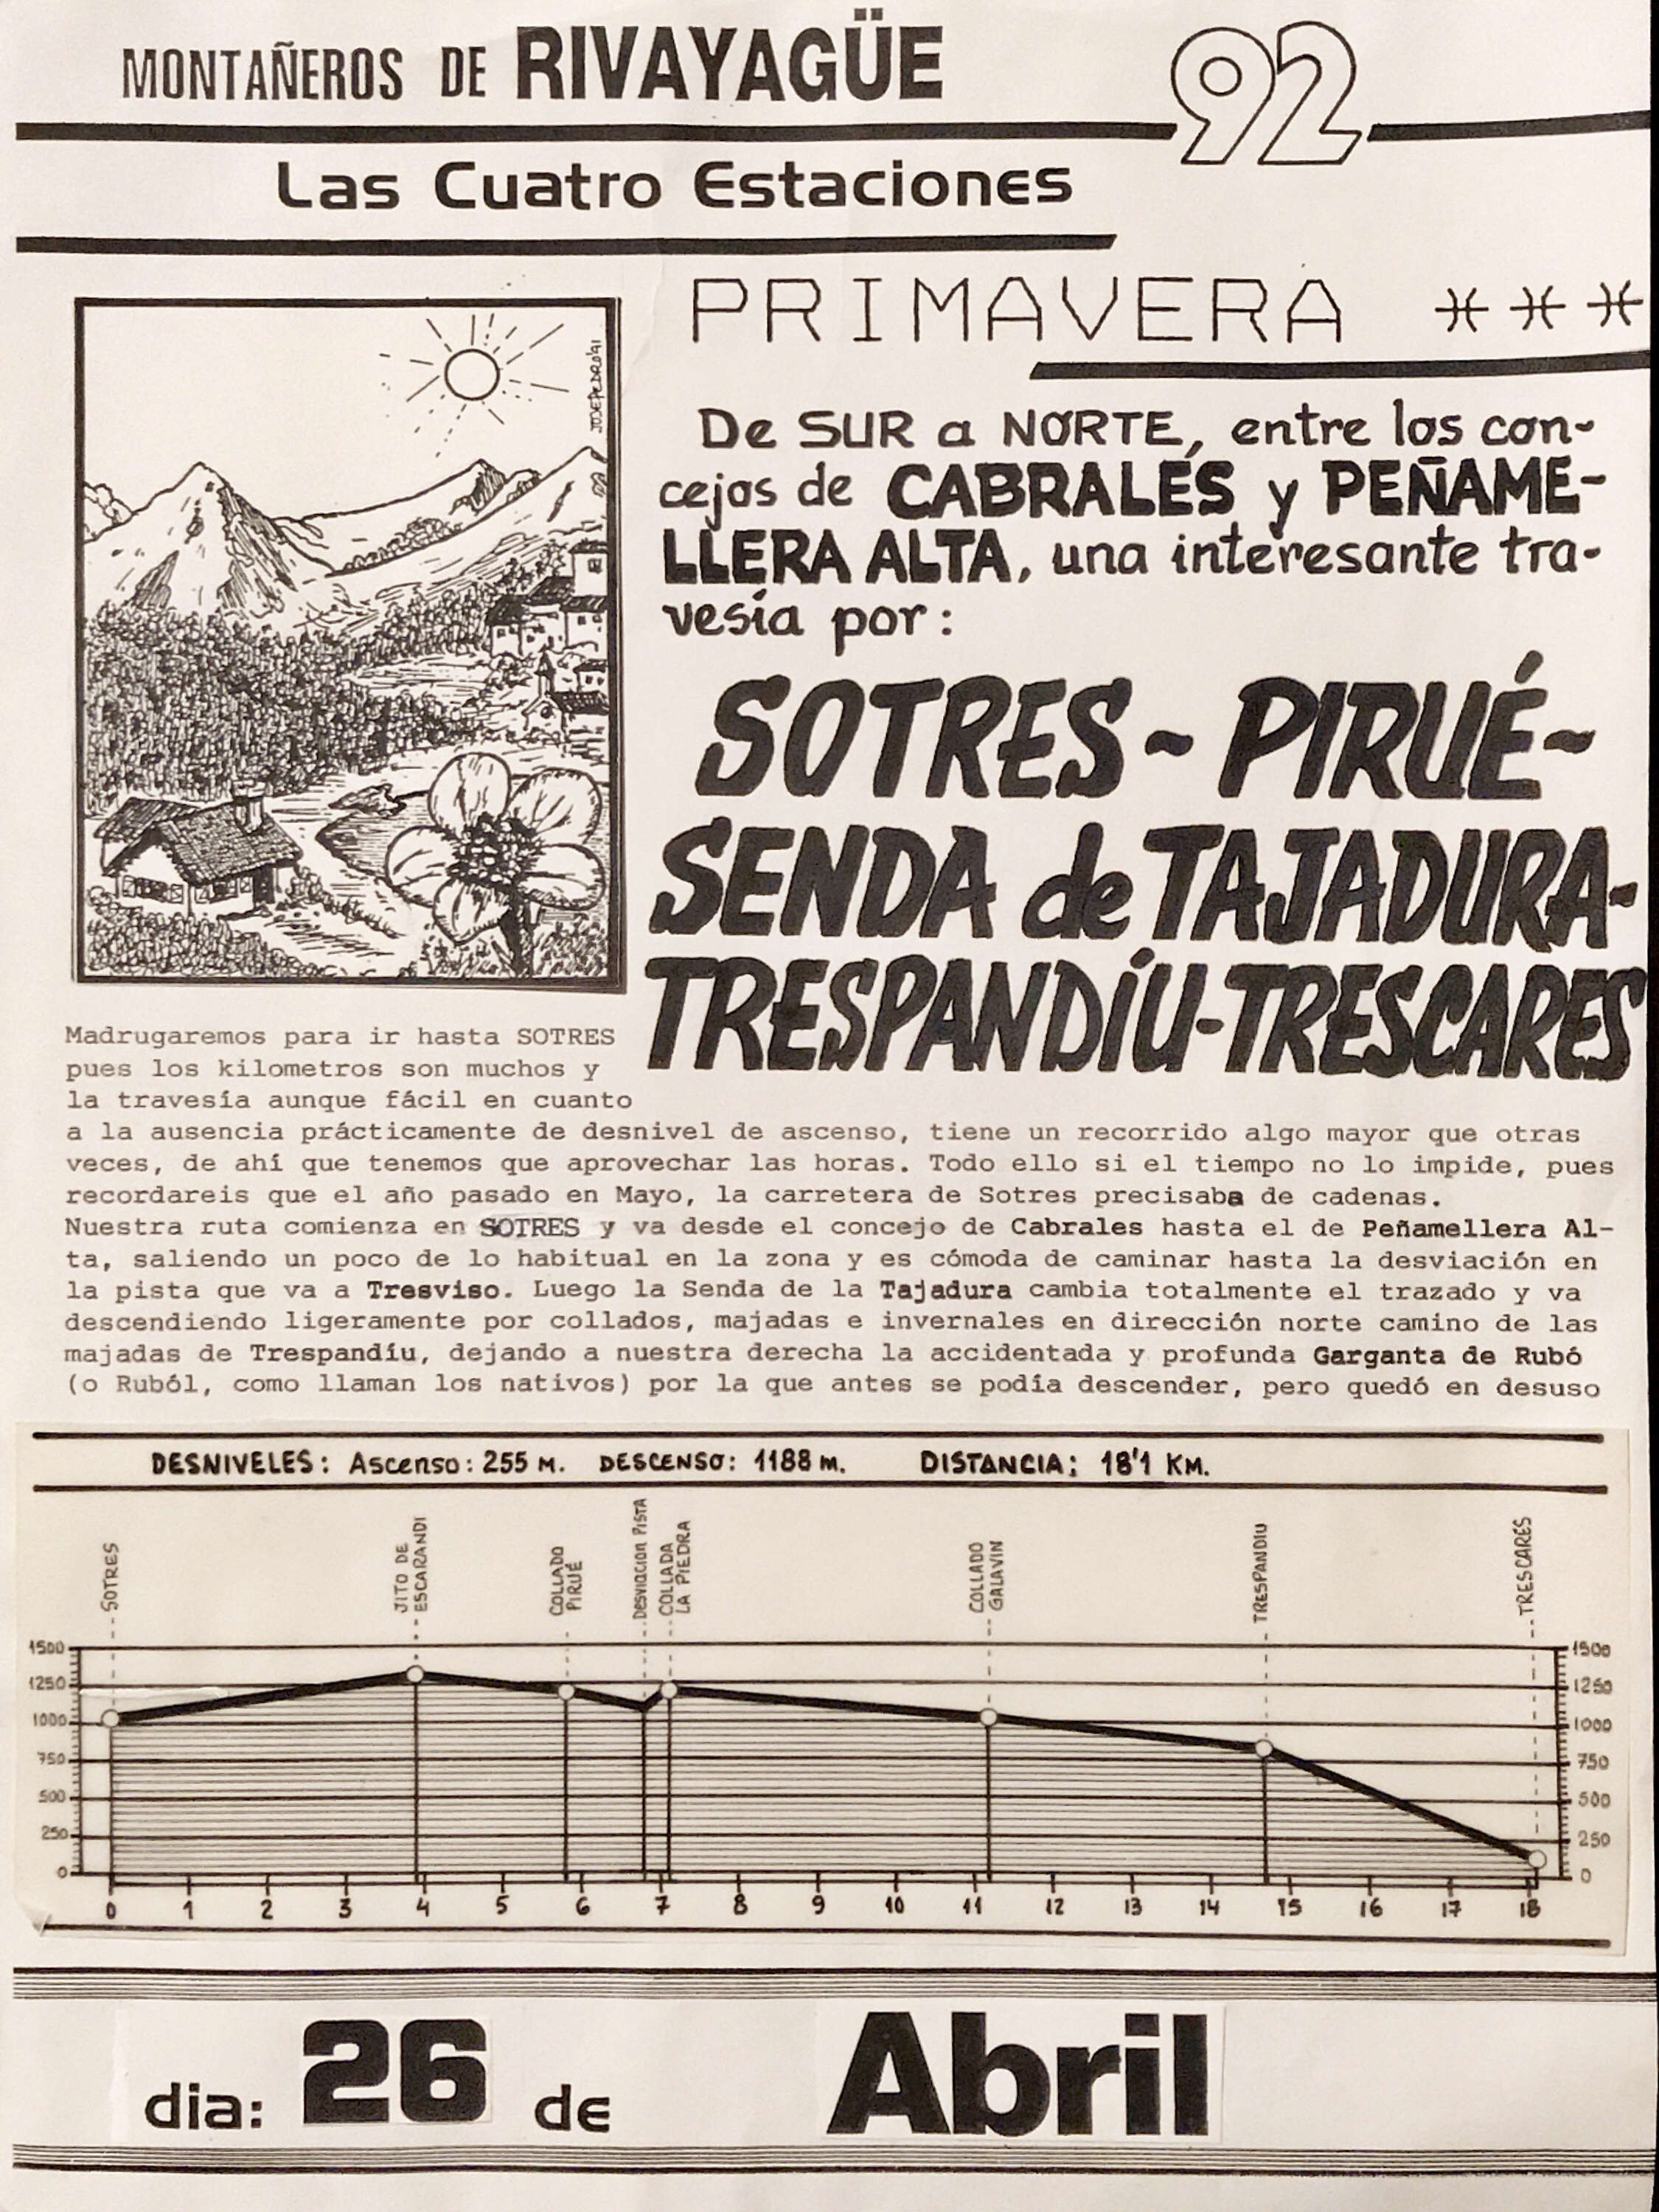 26 abril, 1992: Sotres - Pirué - Senda de Tajadura - Trespandiu - Trescares